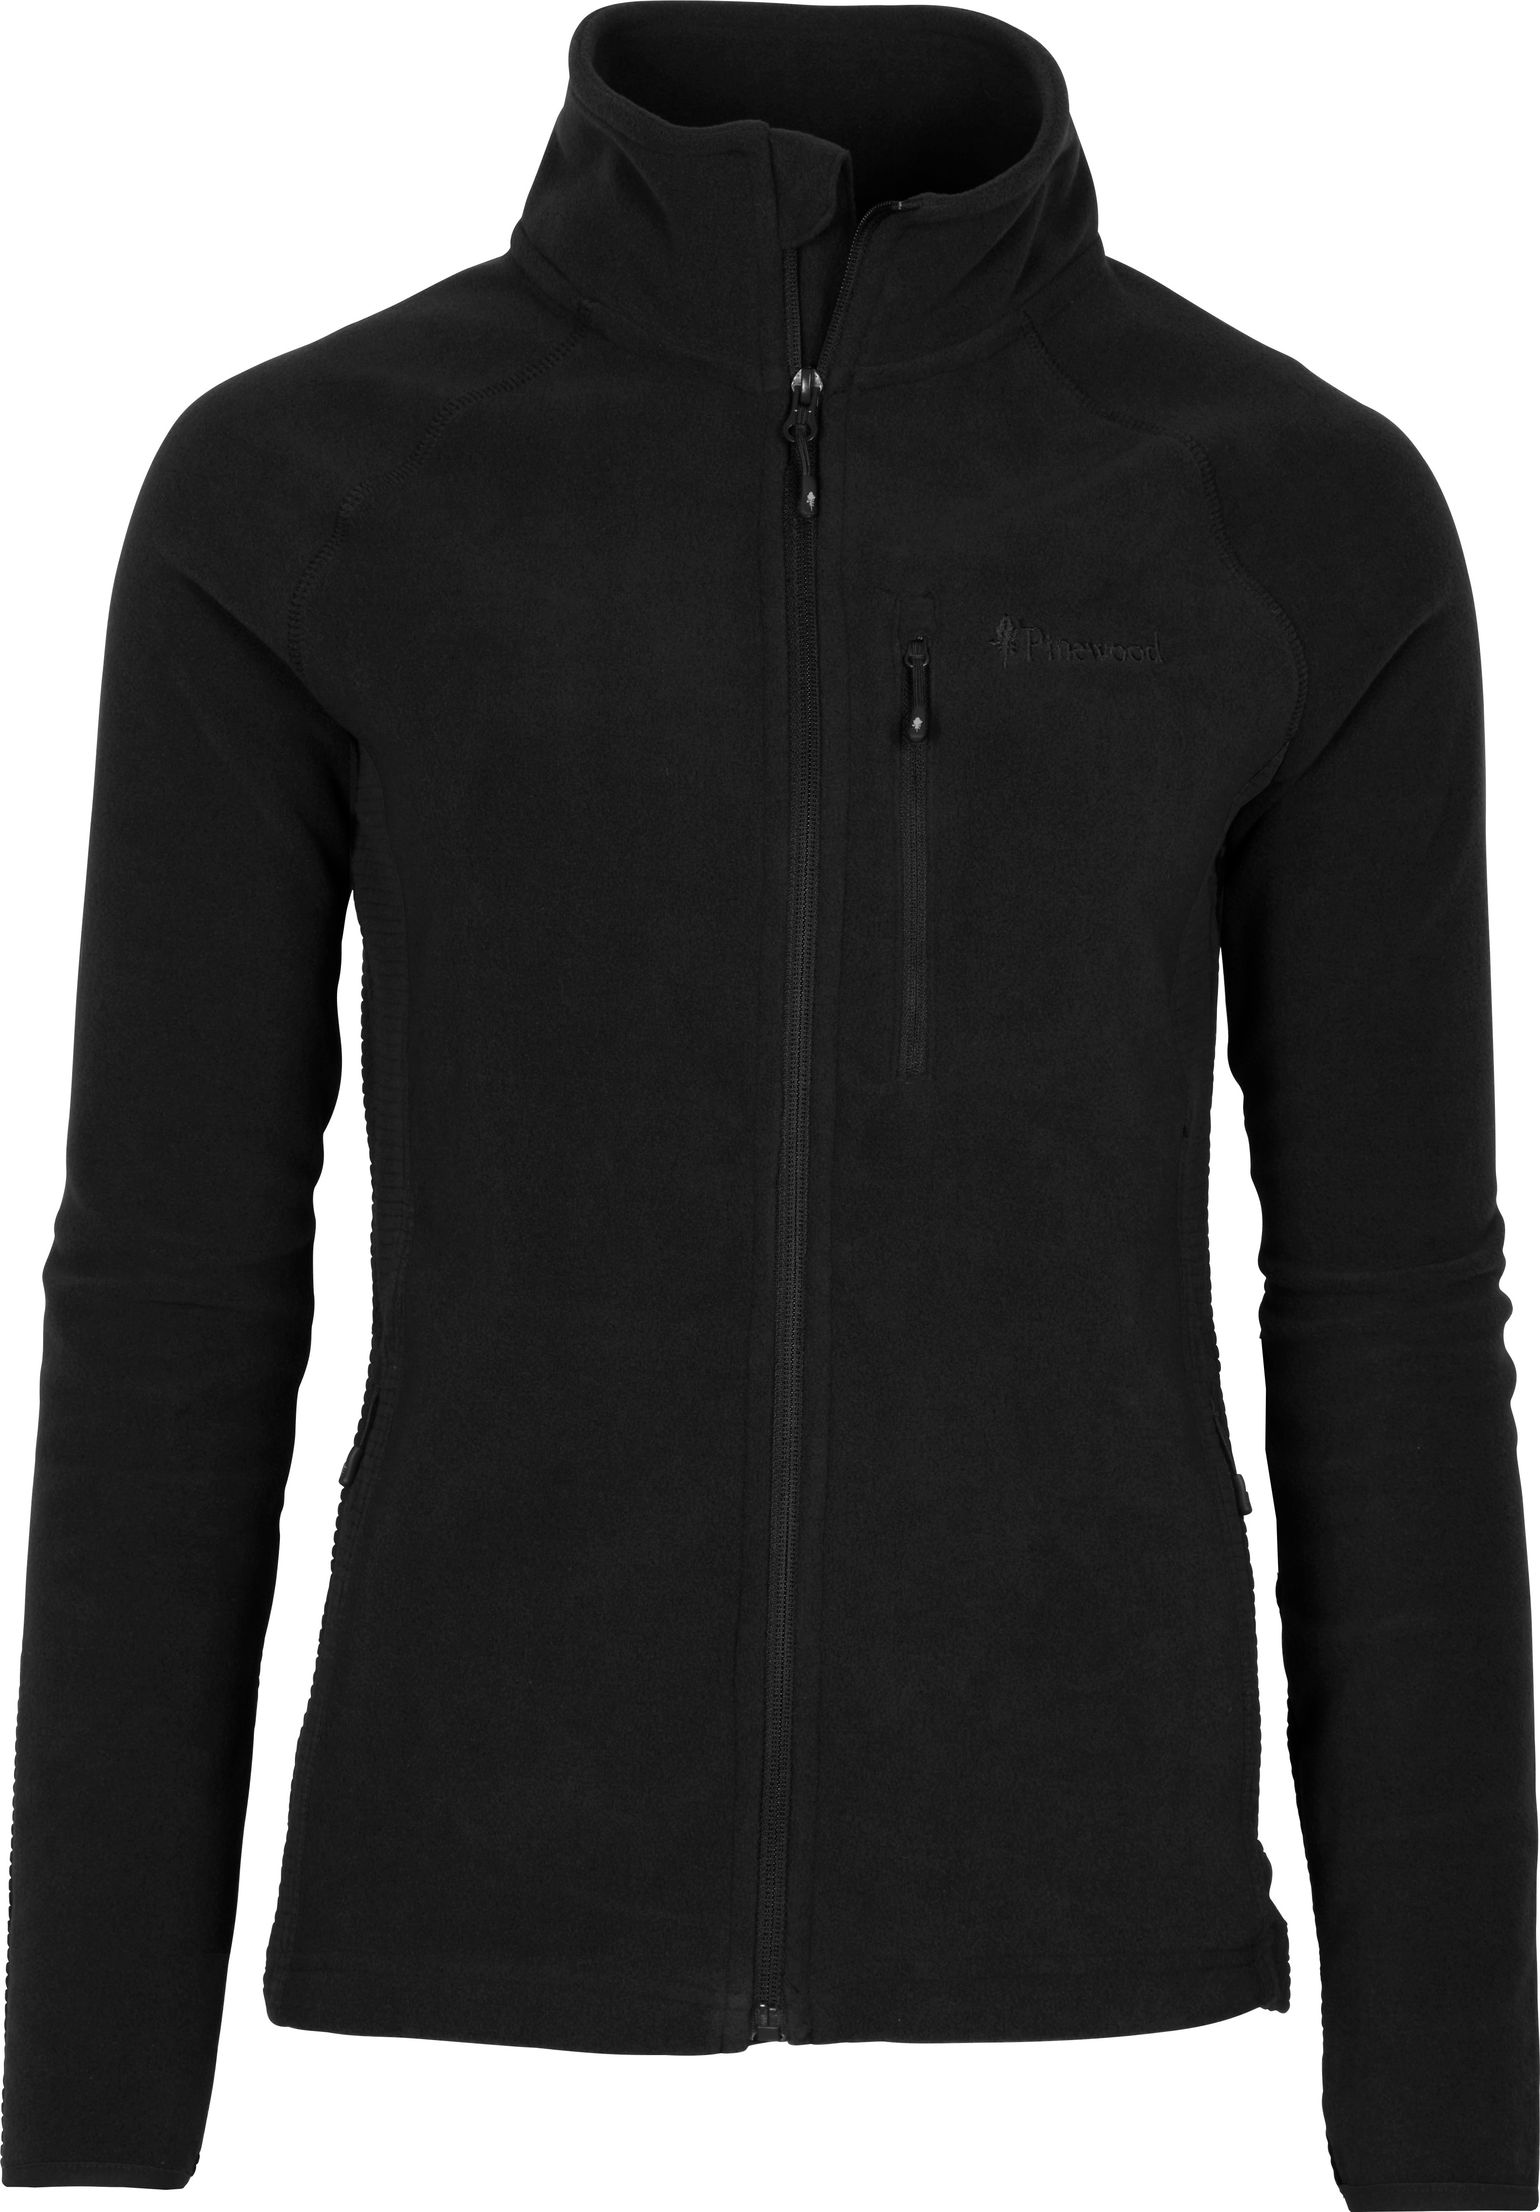 Women's Air Vent Fleece Jacket Black